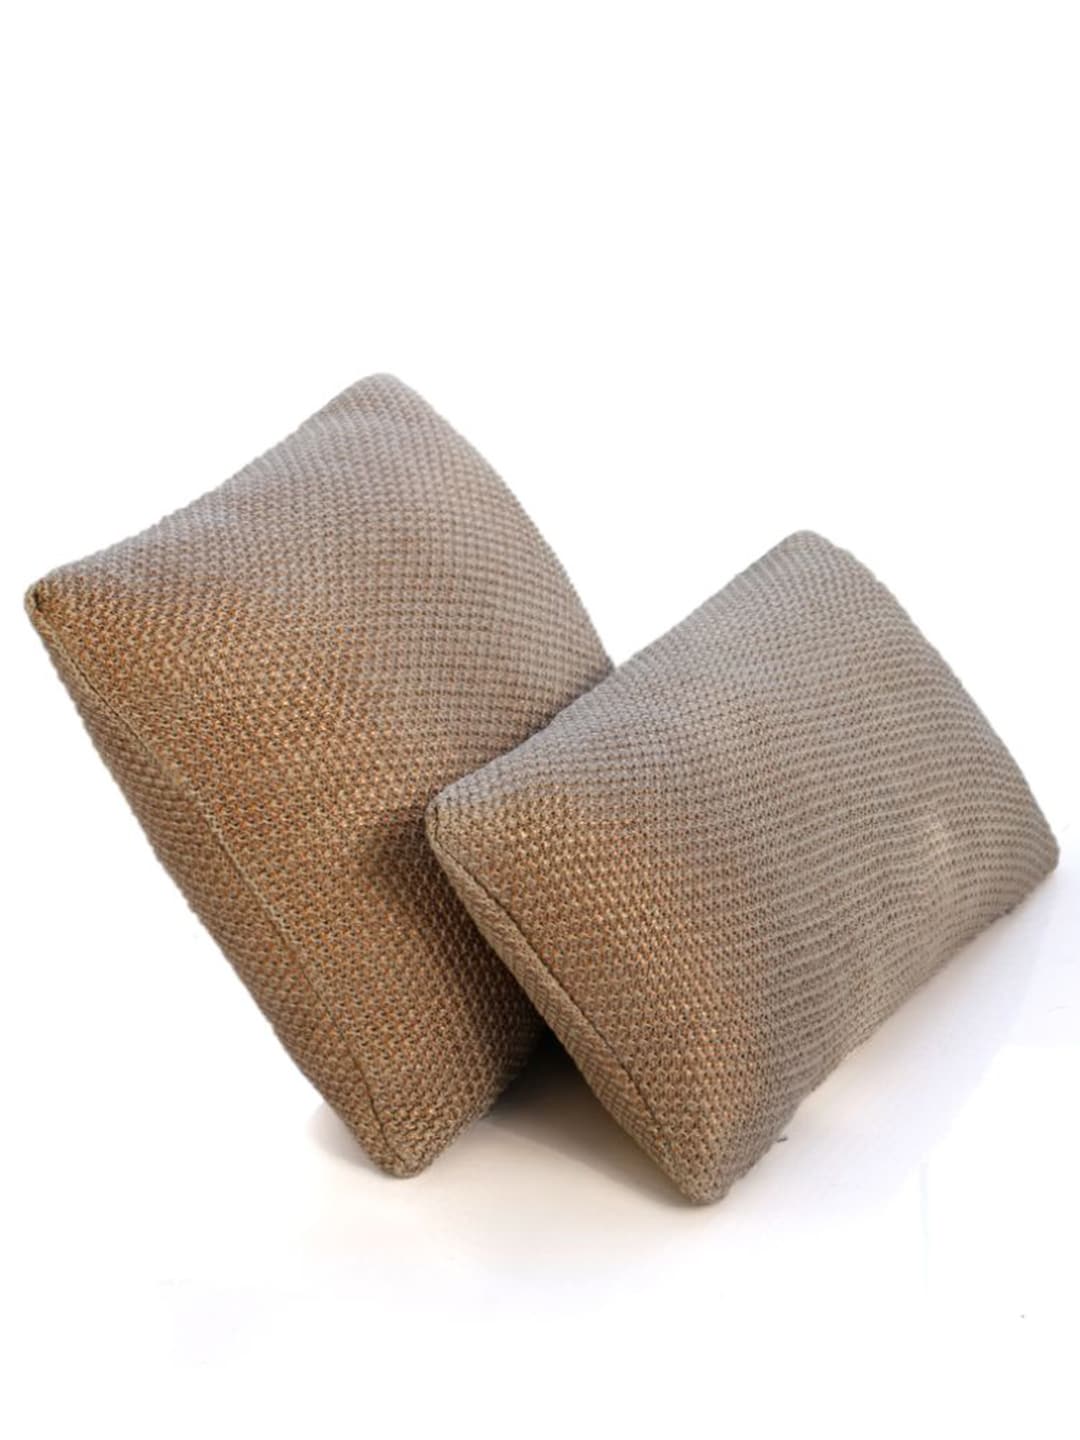 Pluchi Copper-Toned Self Design Square Pure Cotton Knitted Cushion Cover Price in India